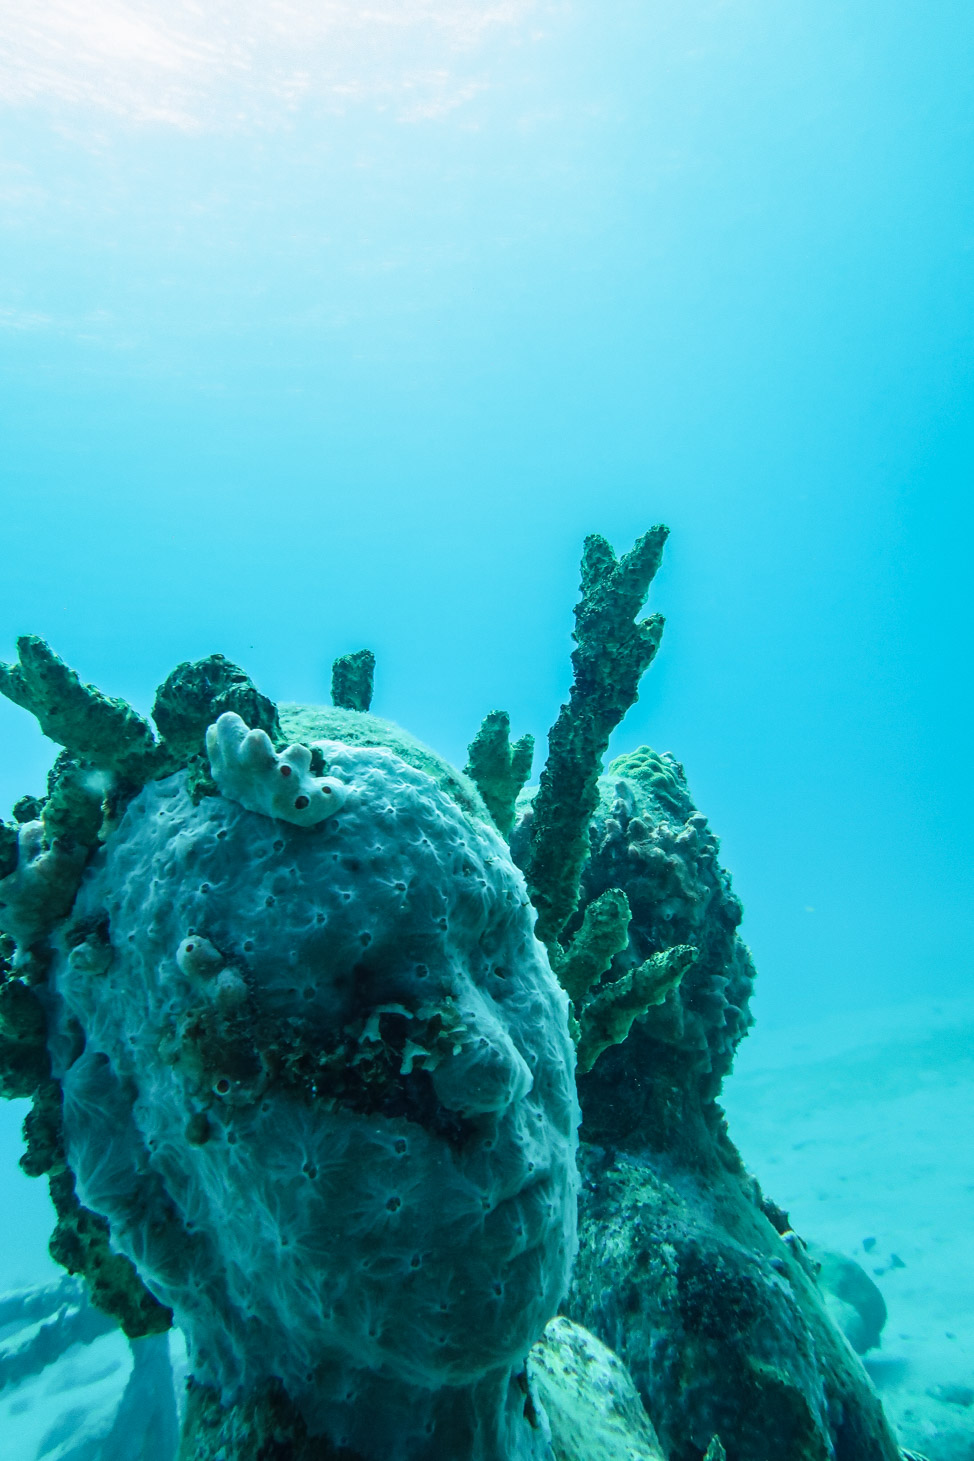 Underwater Grenada: Going Deep into the Marine Sculpture Park